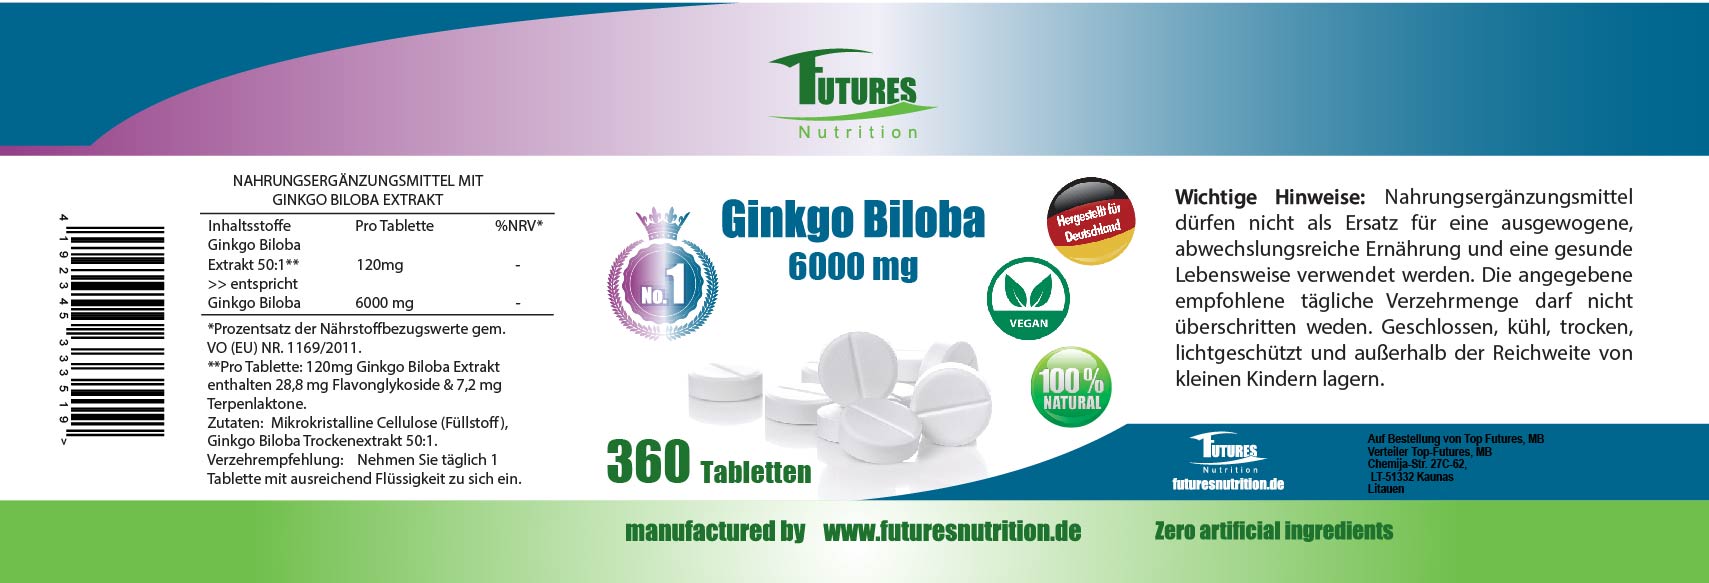 Ginkgo biloba 360 tabletter